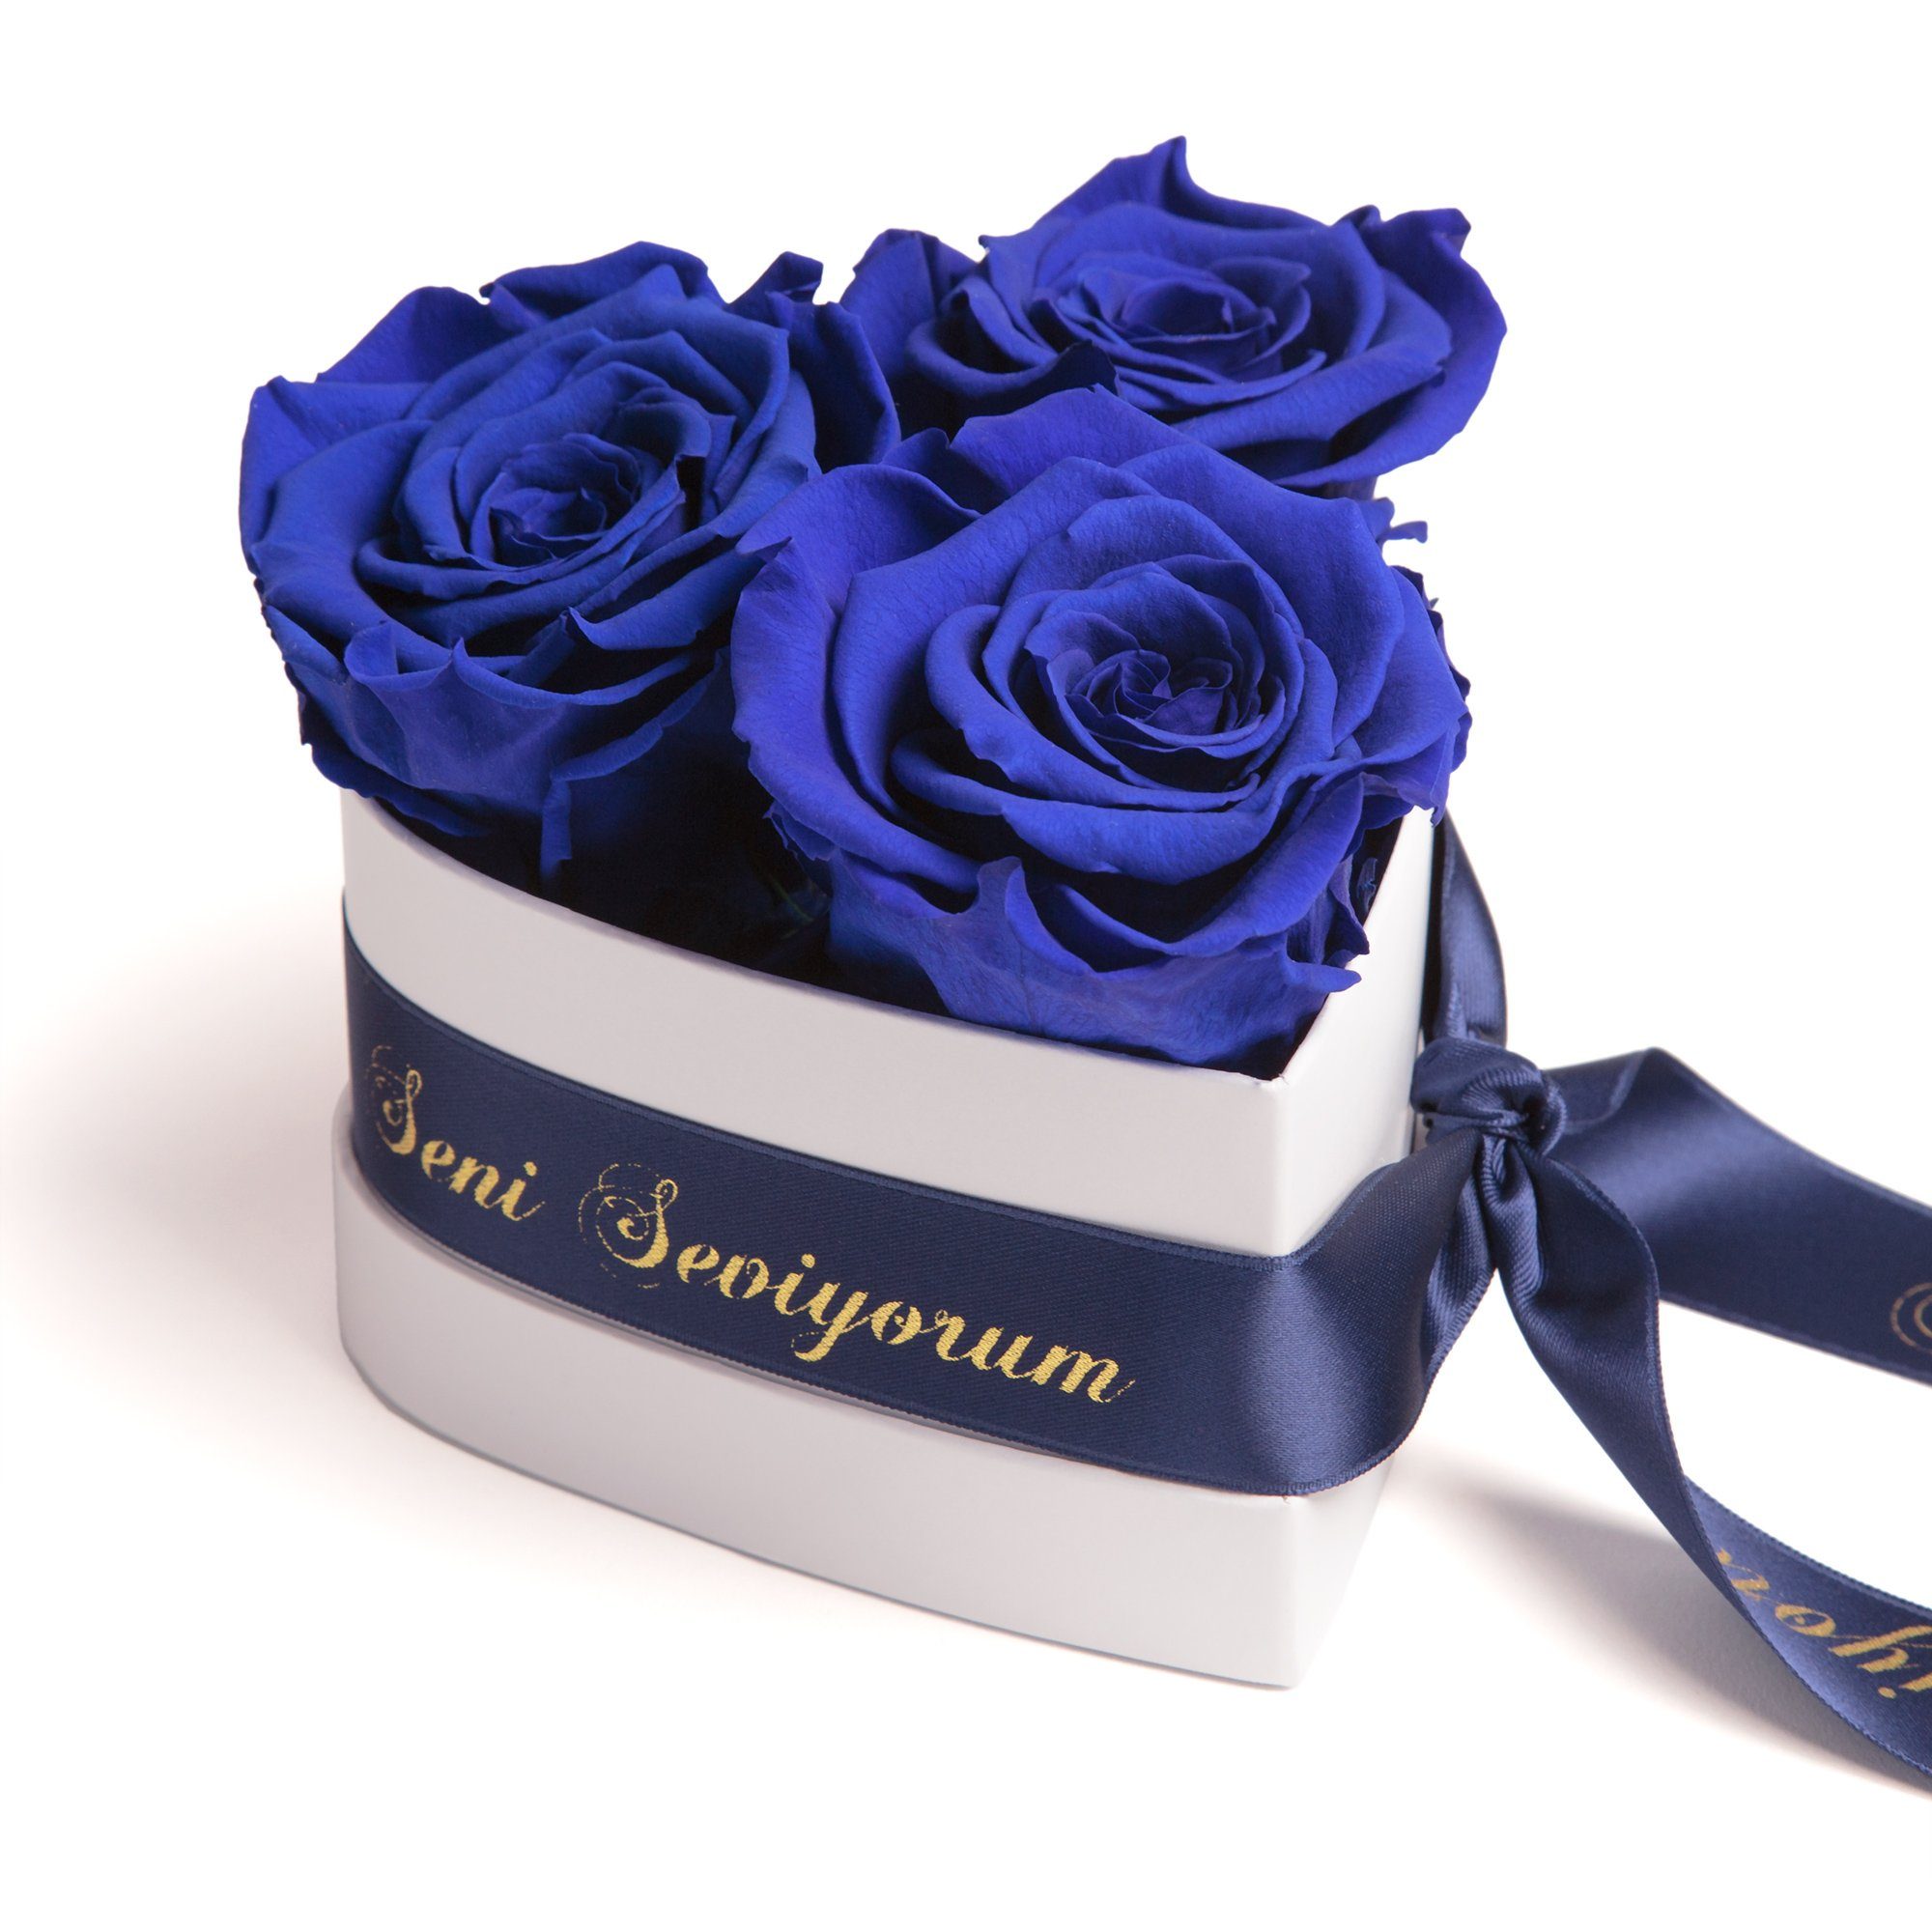 Kunstblume Seni Seviyorum Infinity Rosenbox Herz 3 echte Rosen konserviert Rose, ROSEMARIE SCHULZ Heidelberg, Höhe 10 cm, echte Rosen lang haltbar Blau